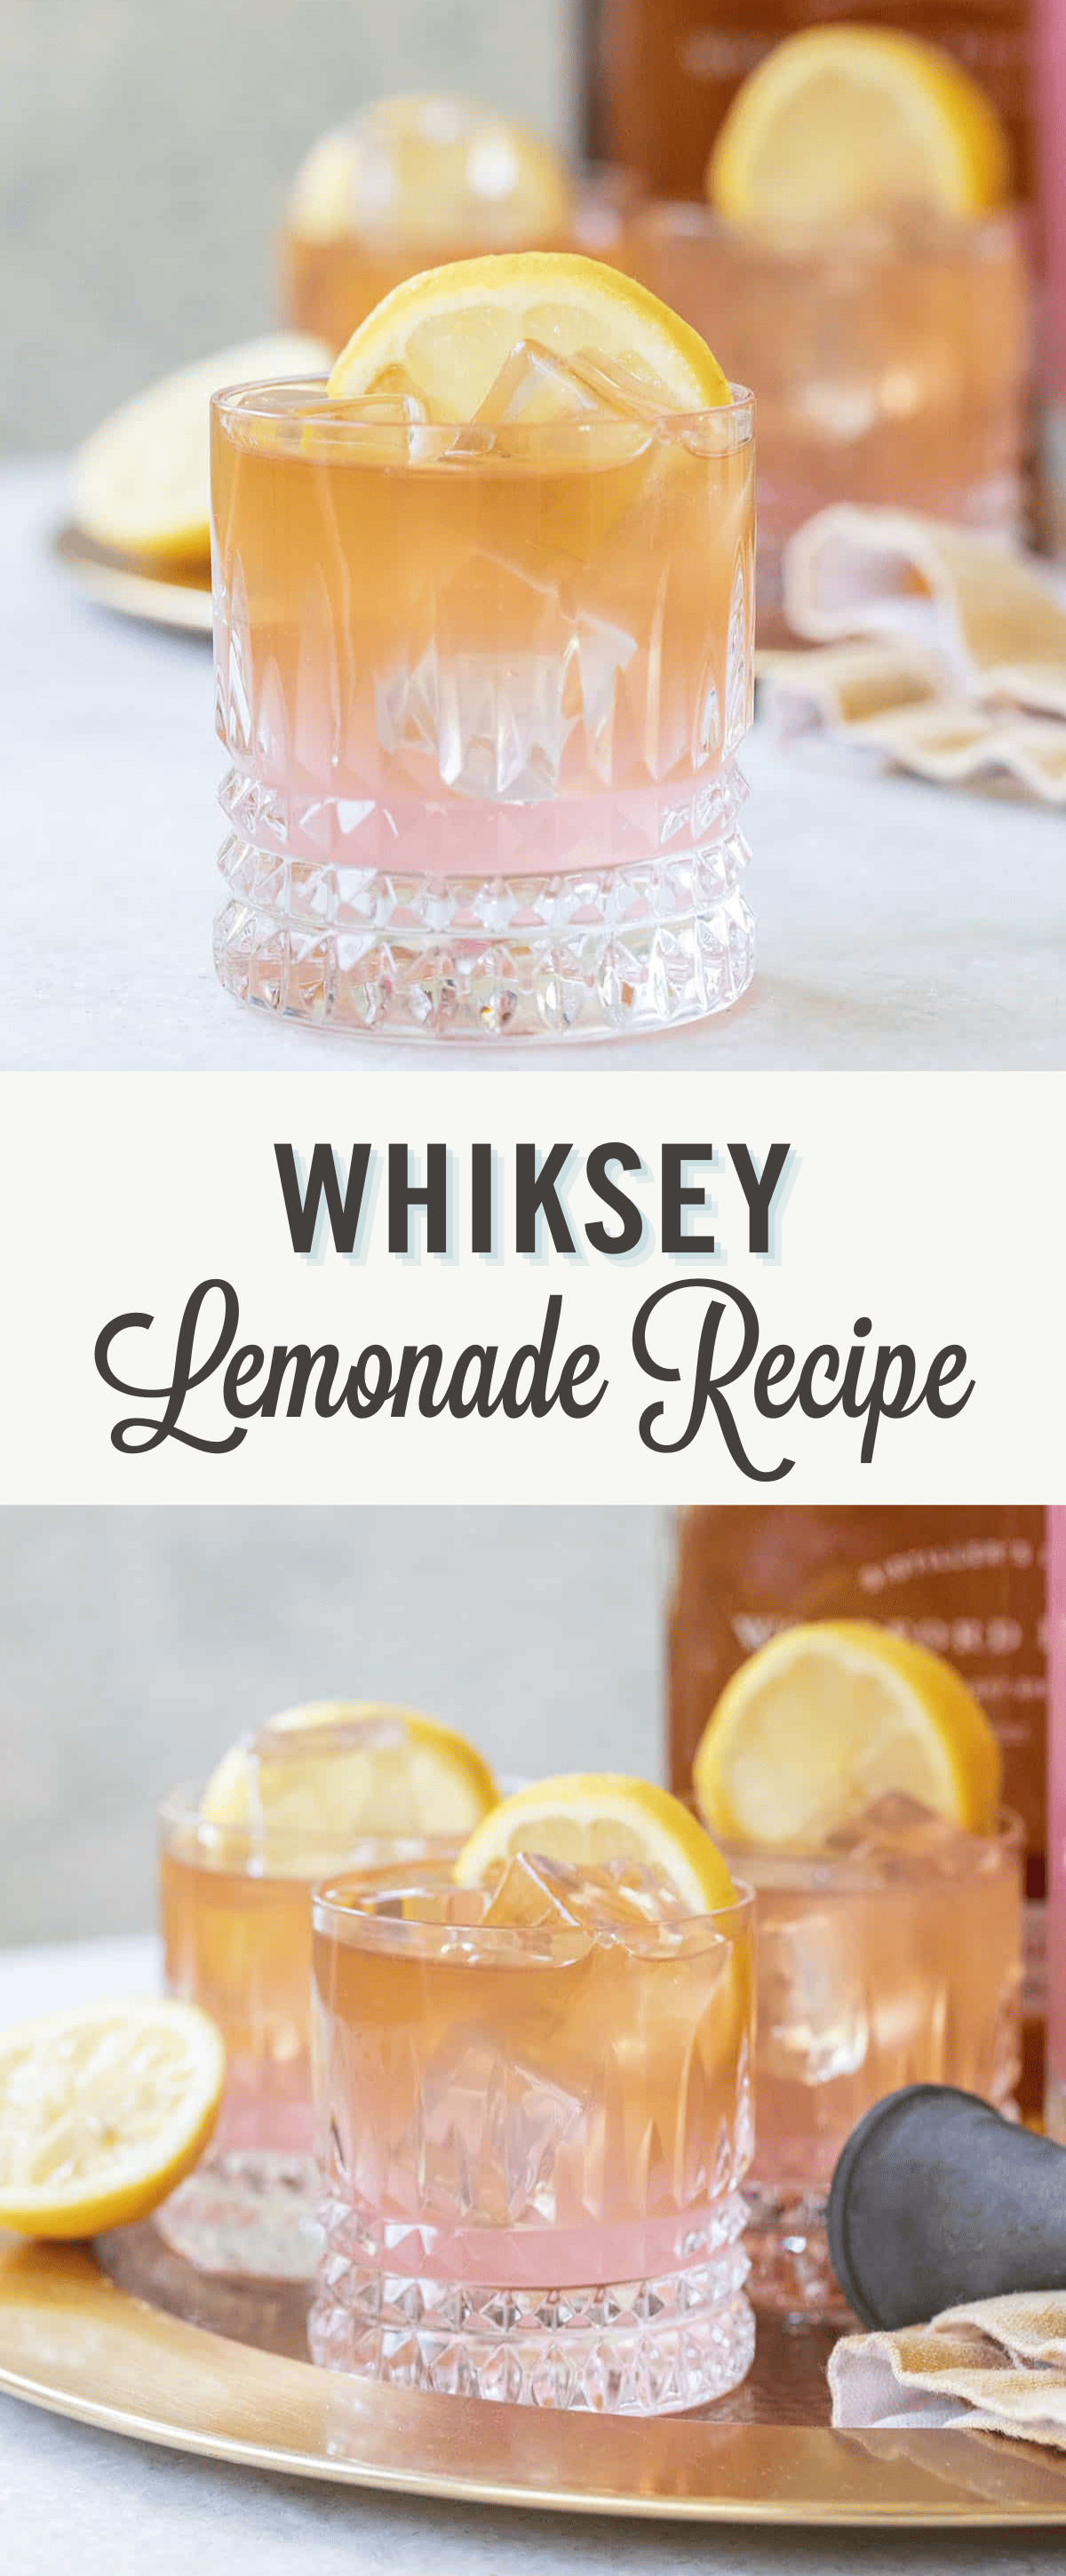 Whiskey lemonade recipe.